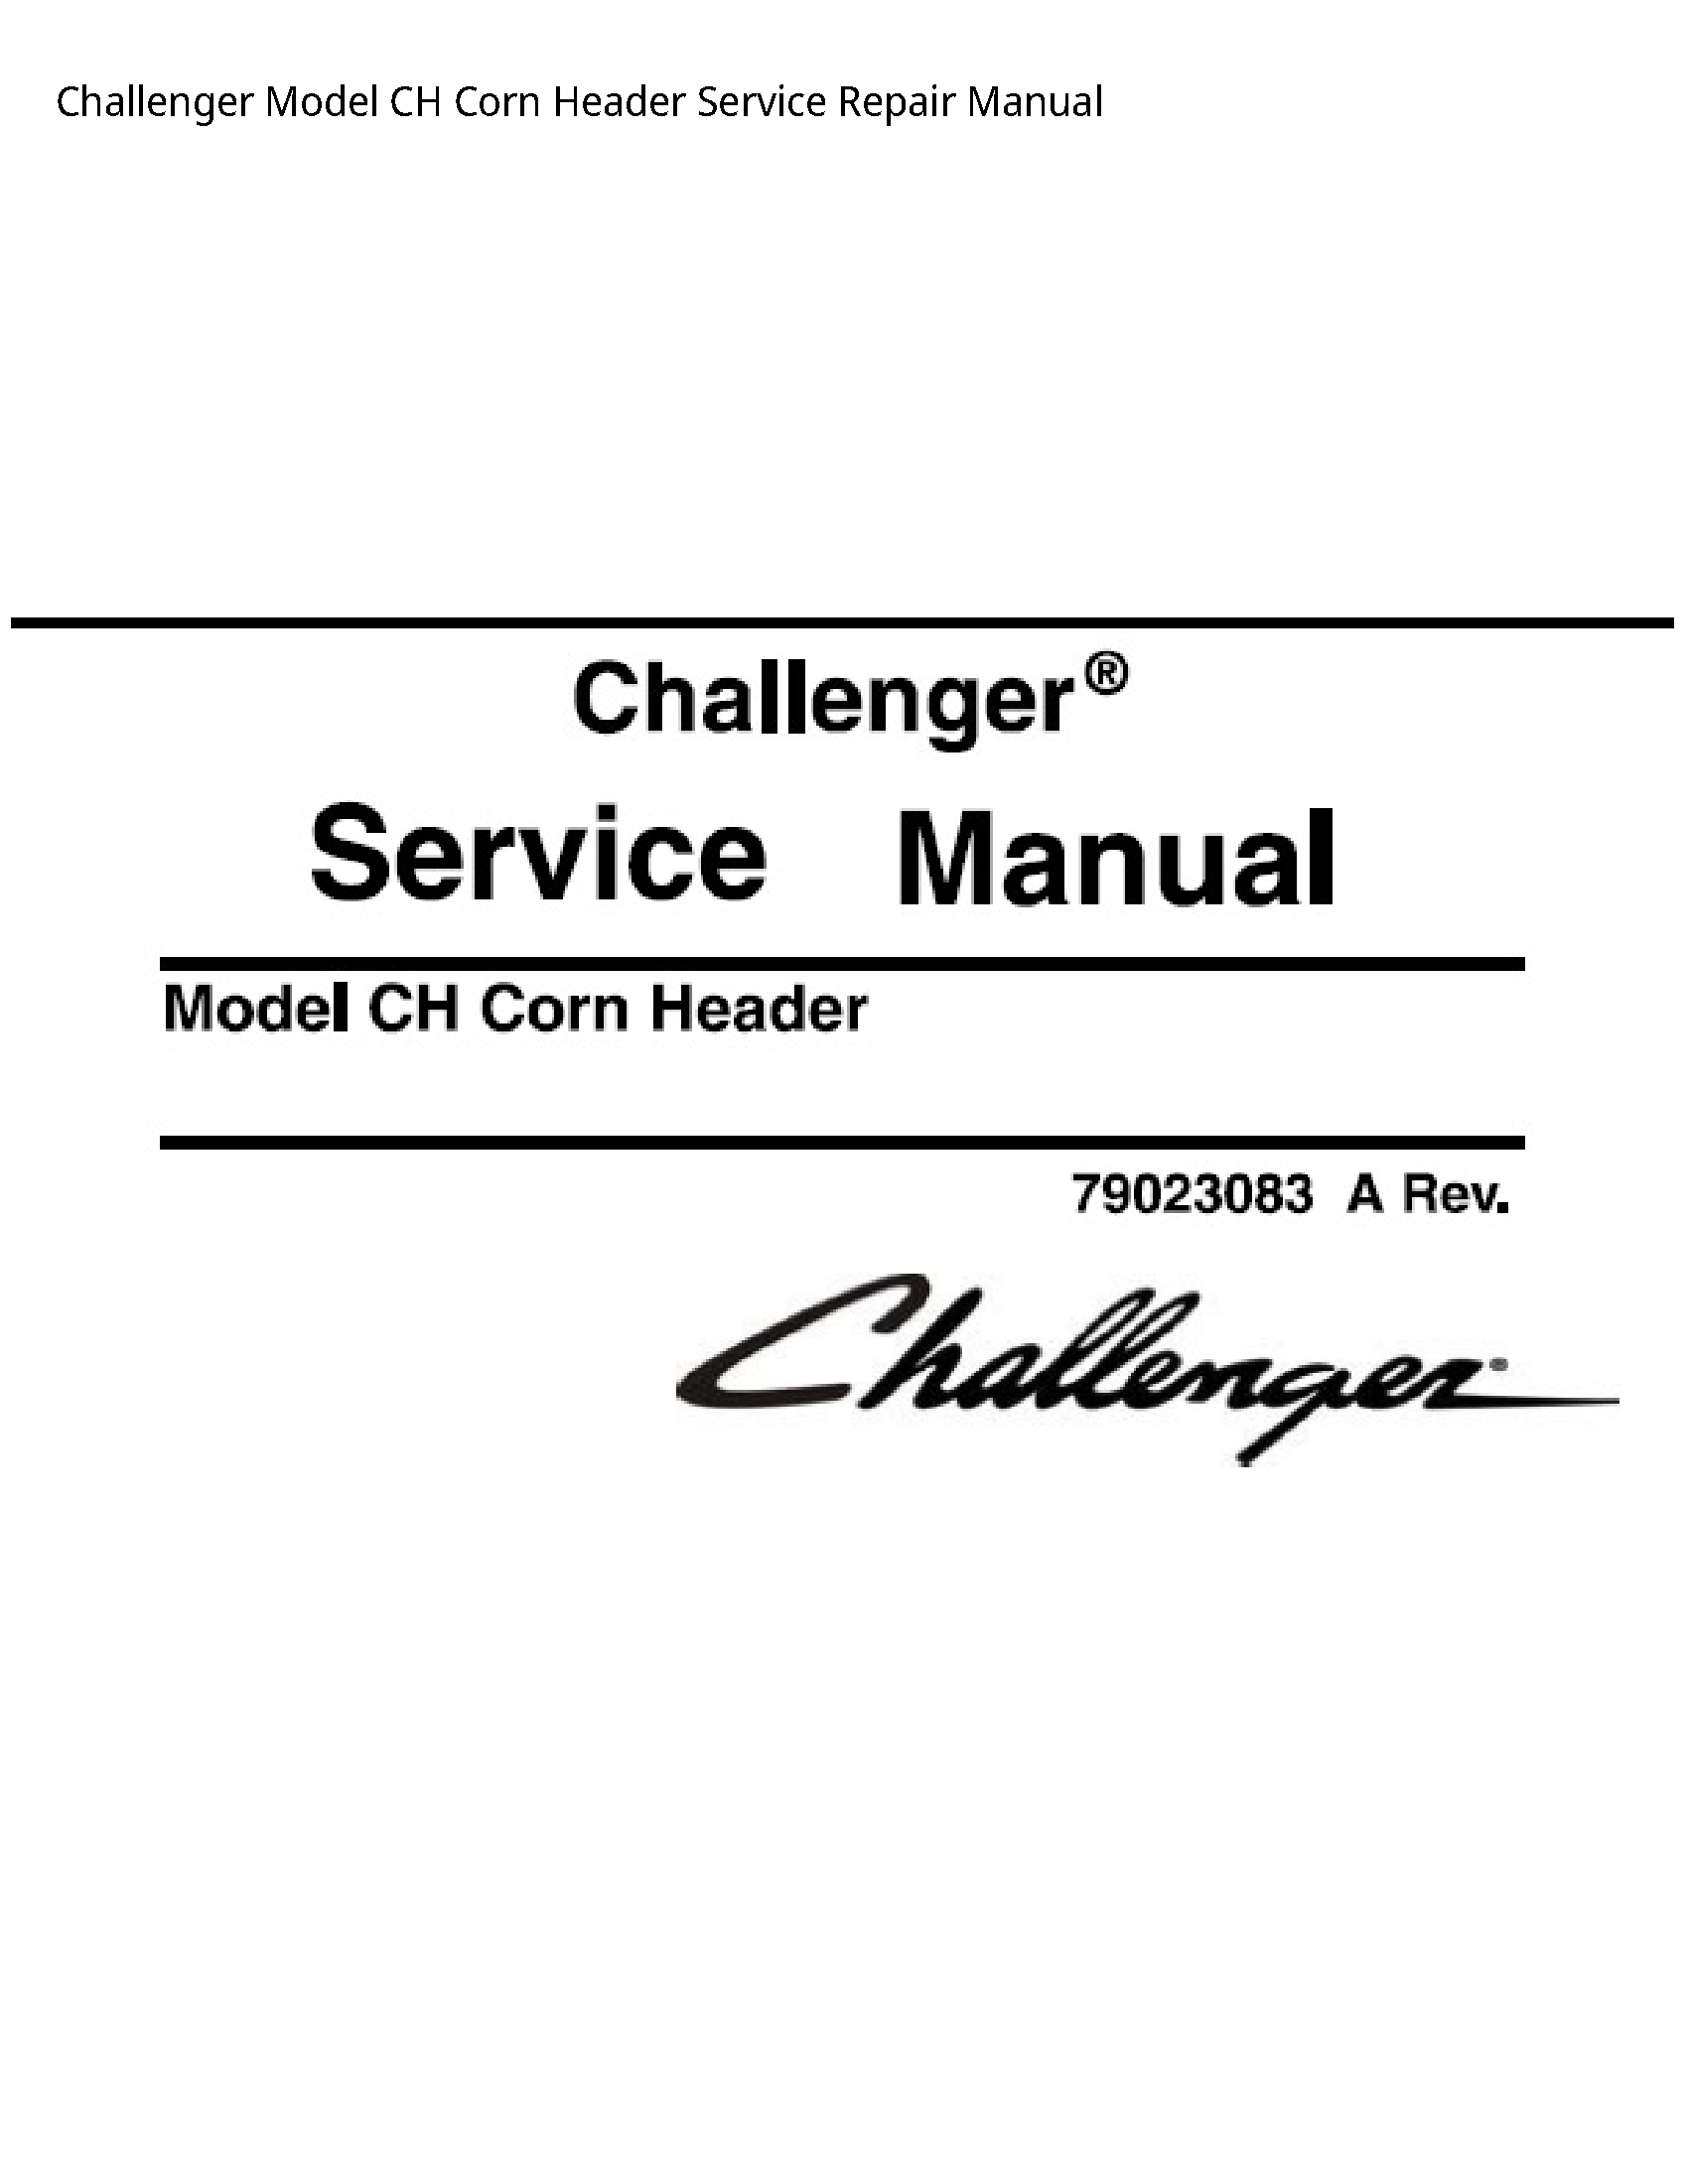 Challenger Model CH Corn Header manual